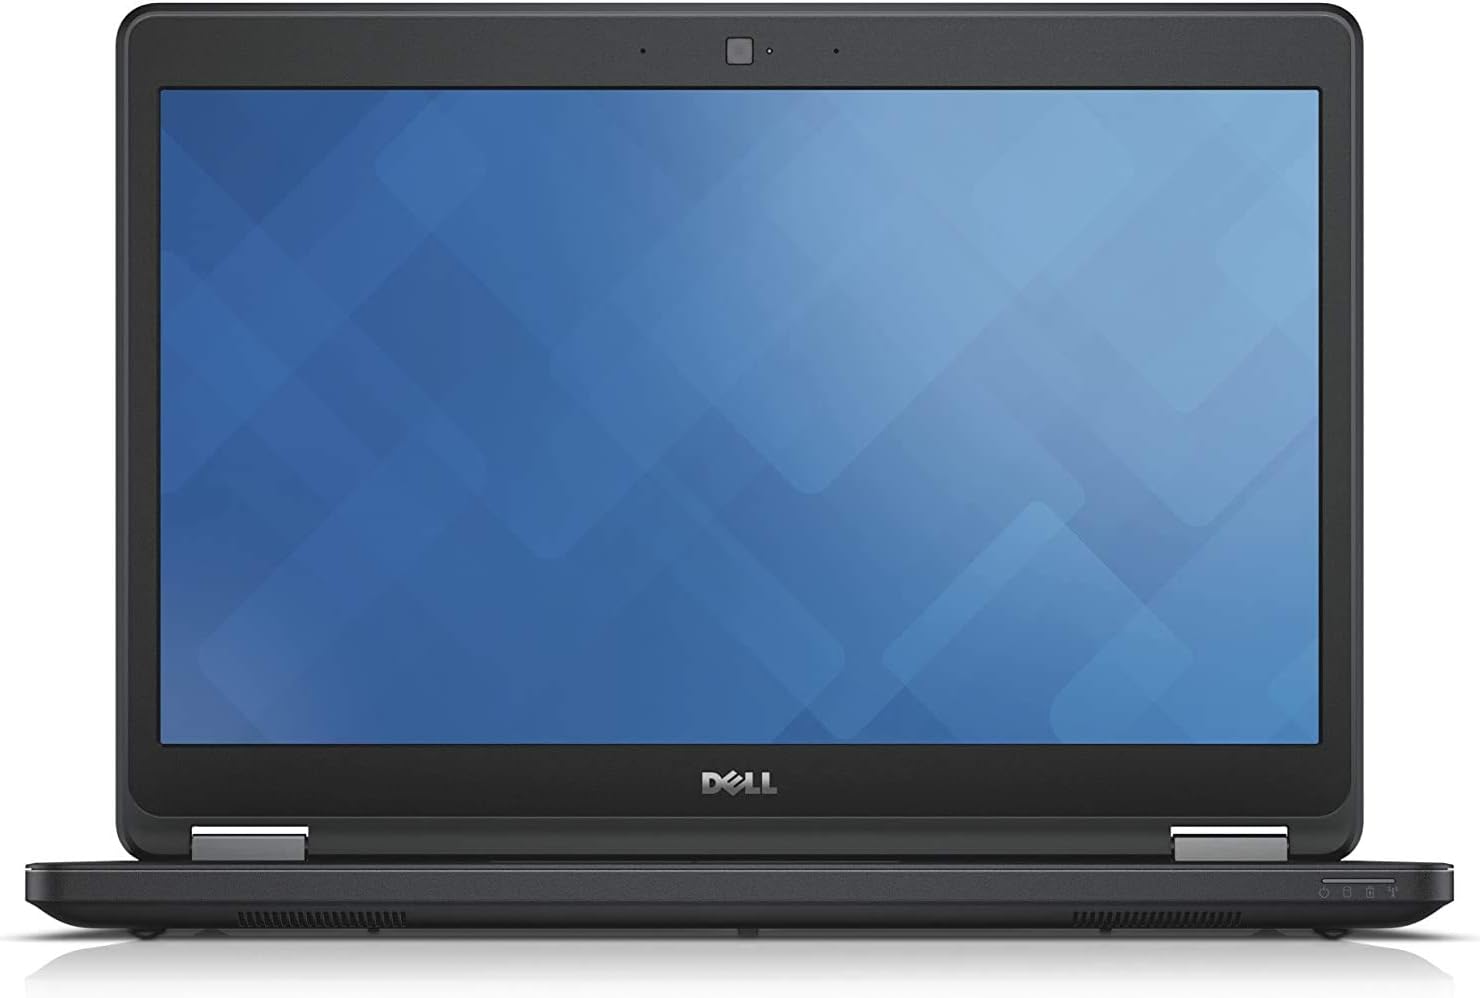 Refurbished Dell Latitude E5450 Laptop Computer Intel Core i5, 16GB Ram, 500GB Hard Drive, Windows 10 with 1 Year Warranty